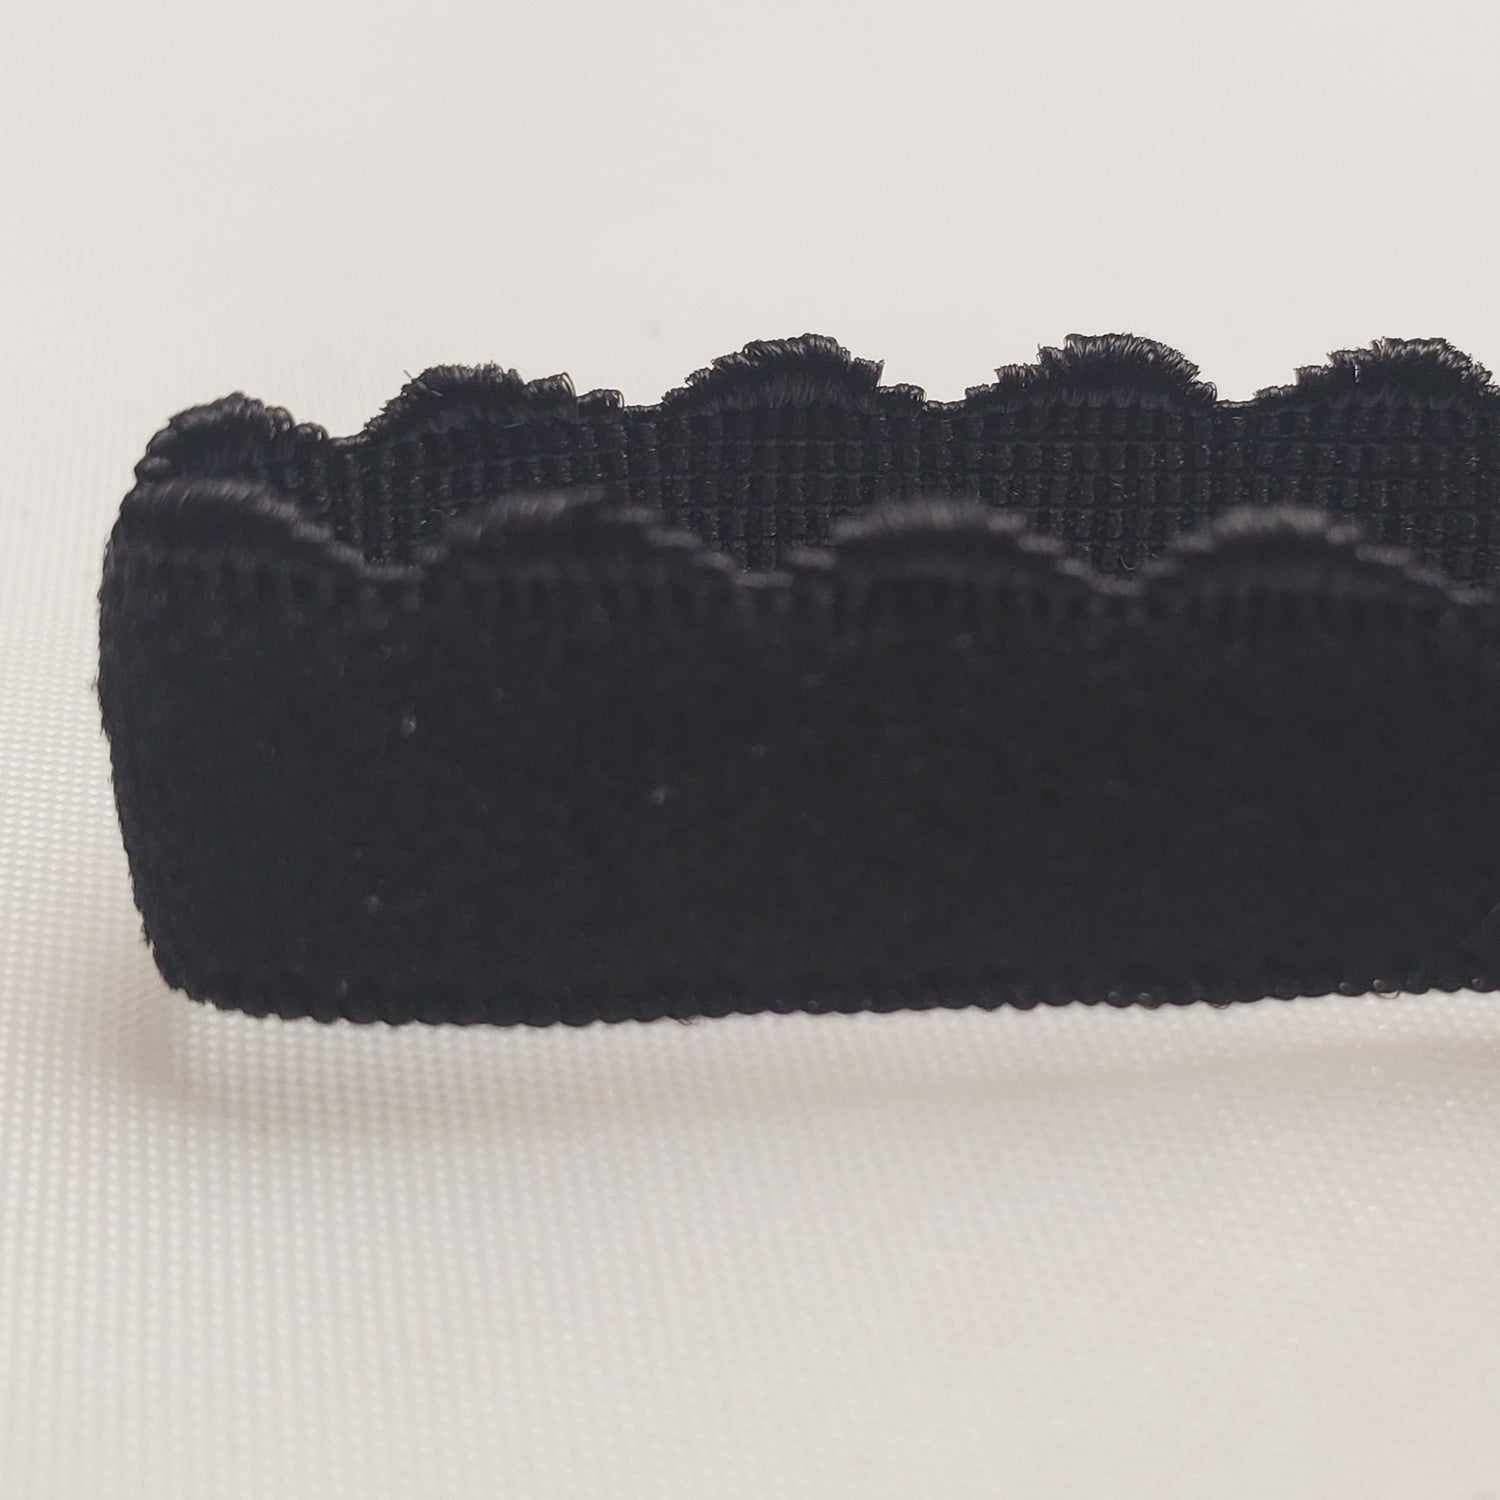 Picot (scalloped) strap elastic for Bras 3/8 Black (10mm) - per meter